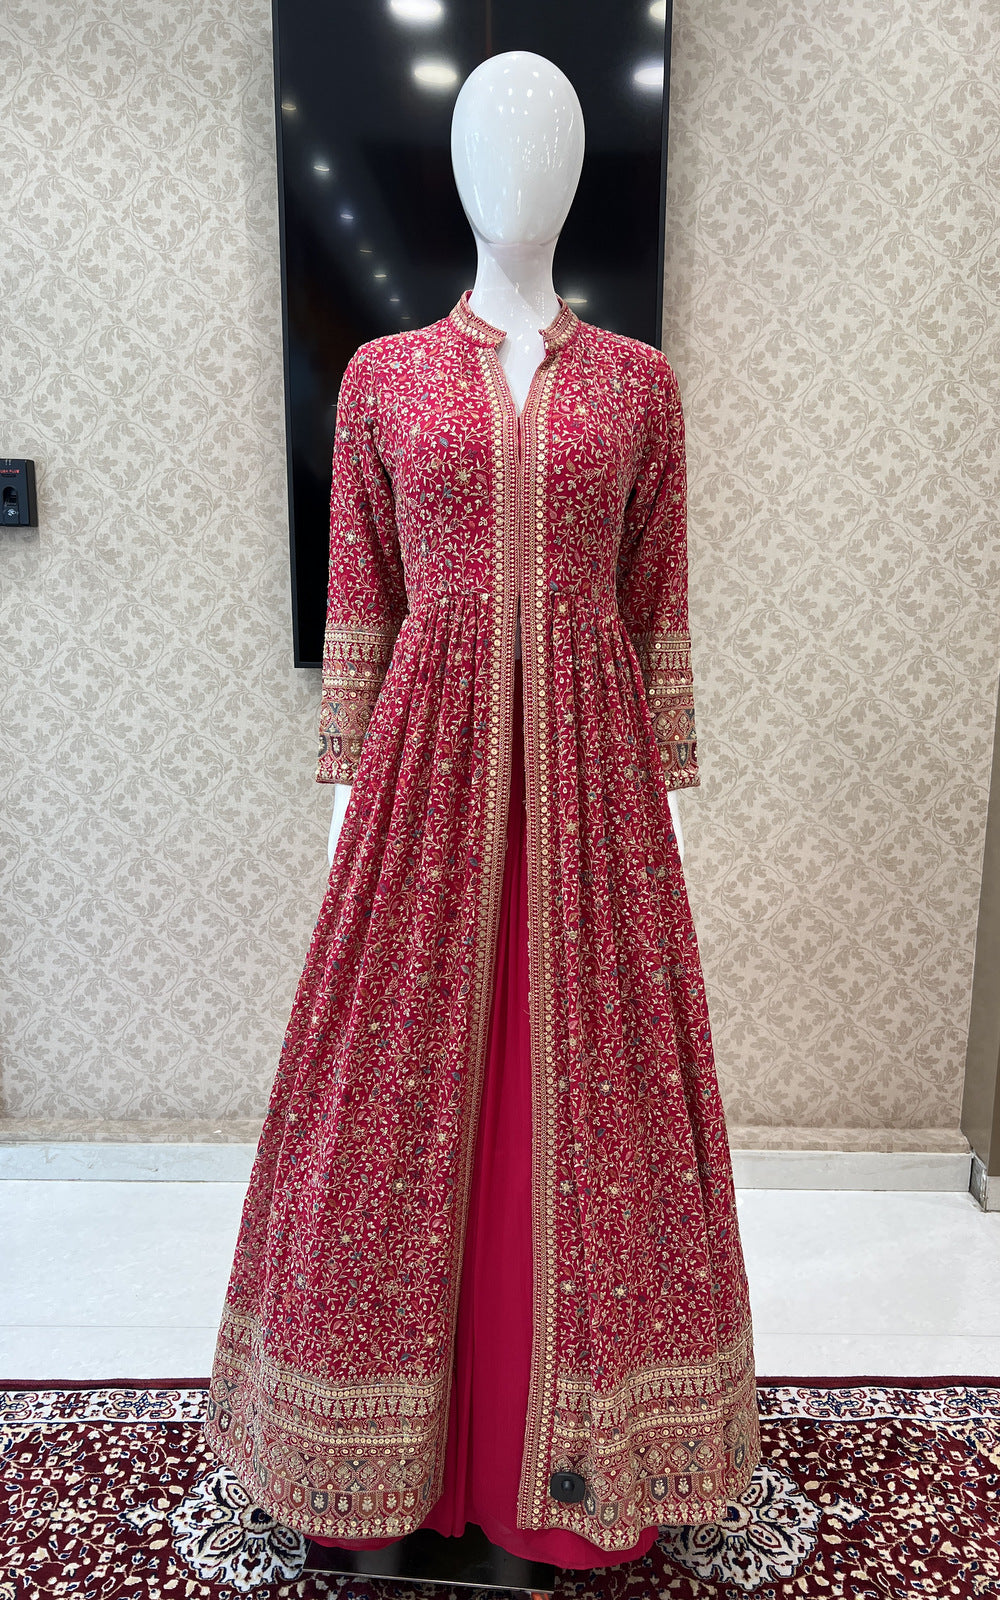 Designer Banarasi Suit Sets for Women by InShopping on DeviantArt